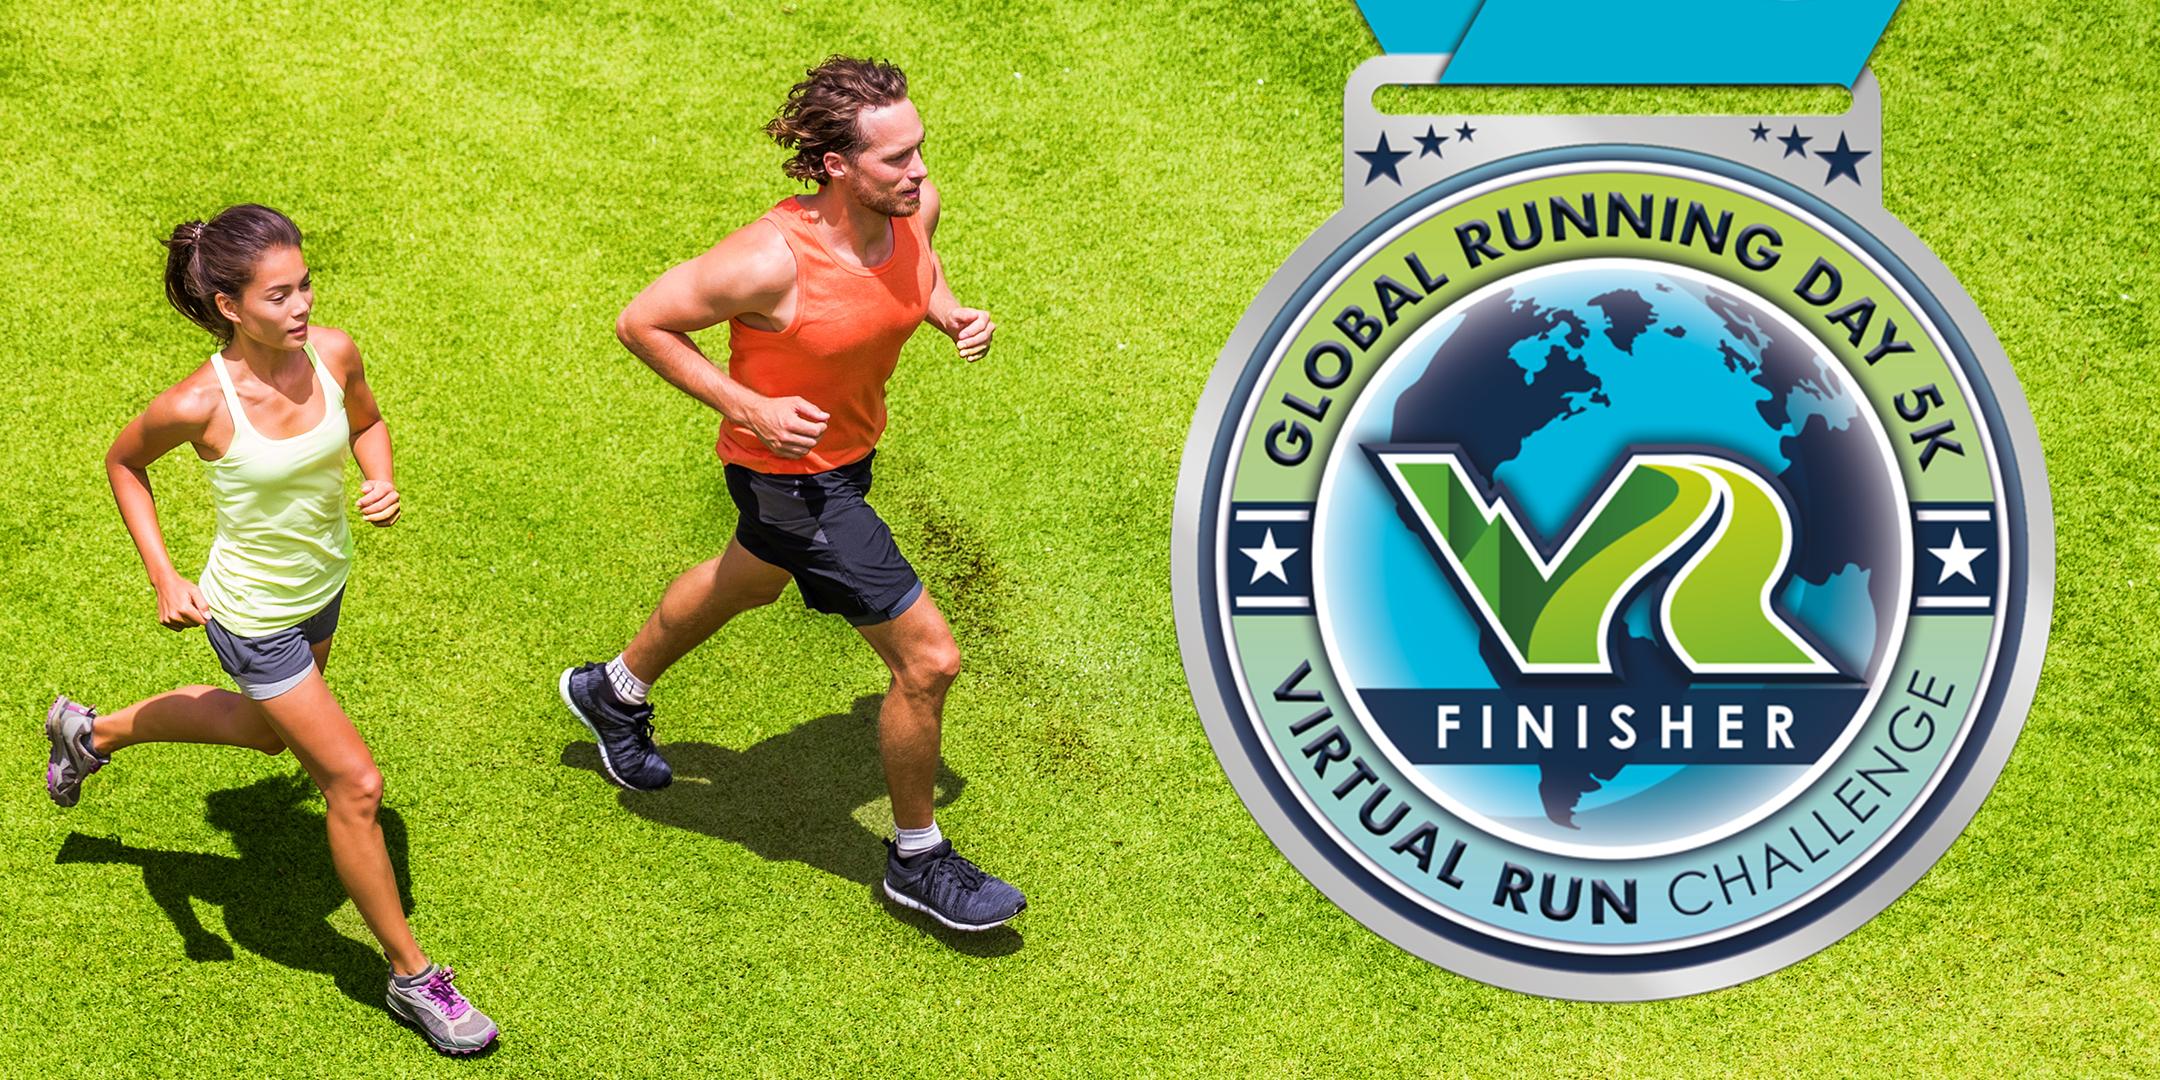 2020 Global Running Day Free Virtual 5k - Knoxville